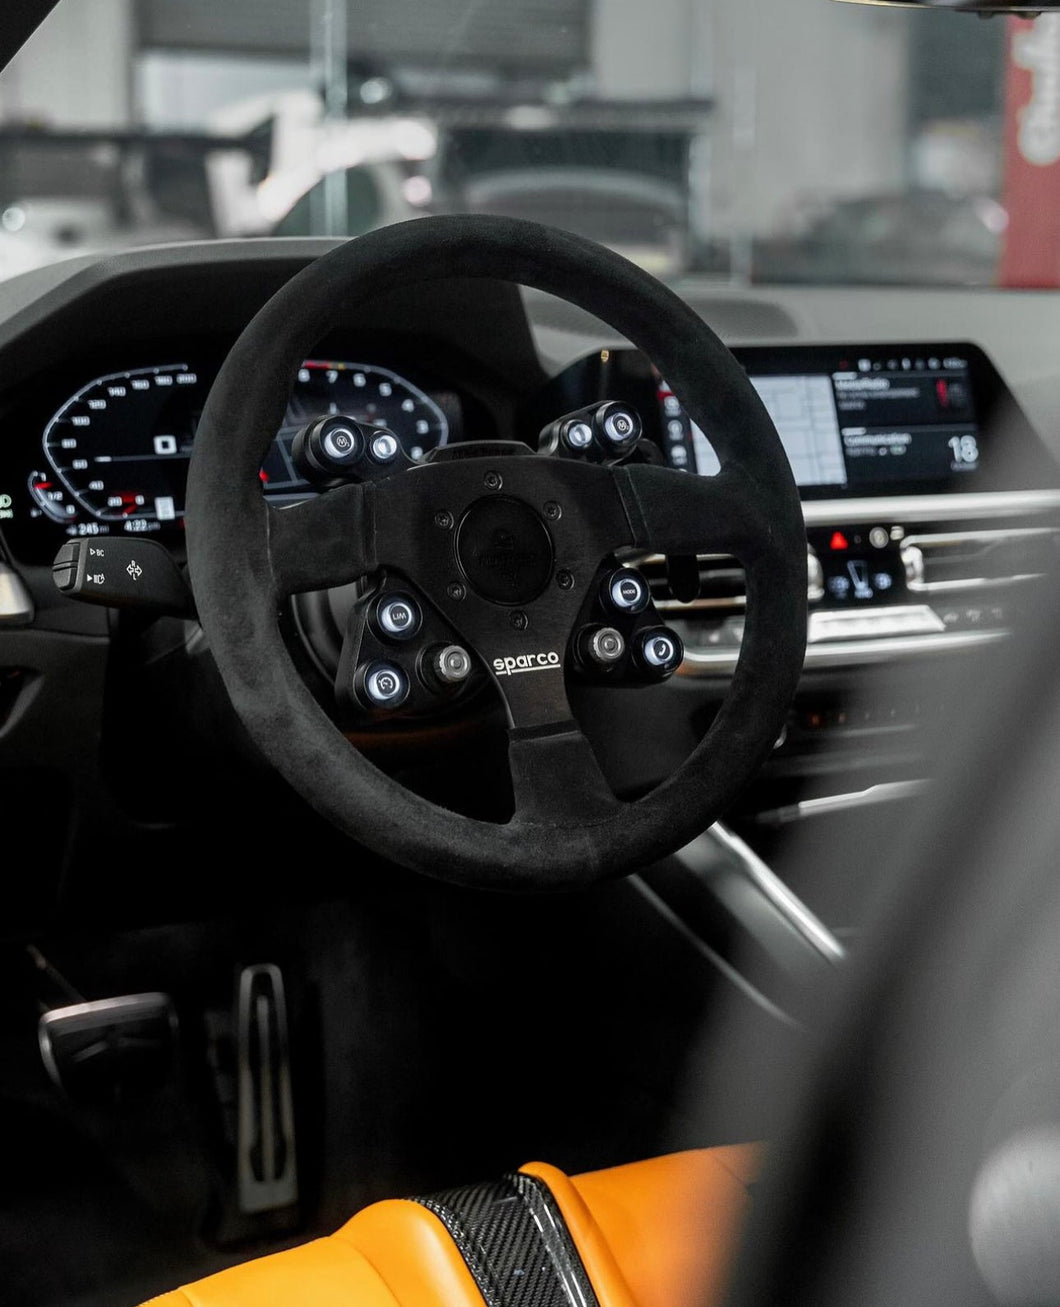 JQ Werks Madtrace BMW G Series Racing Steering Wheel System